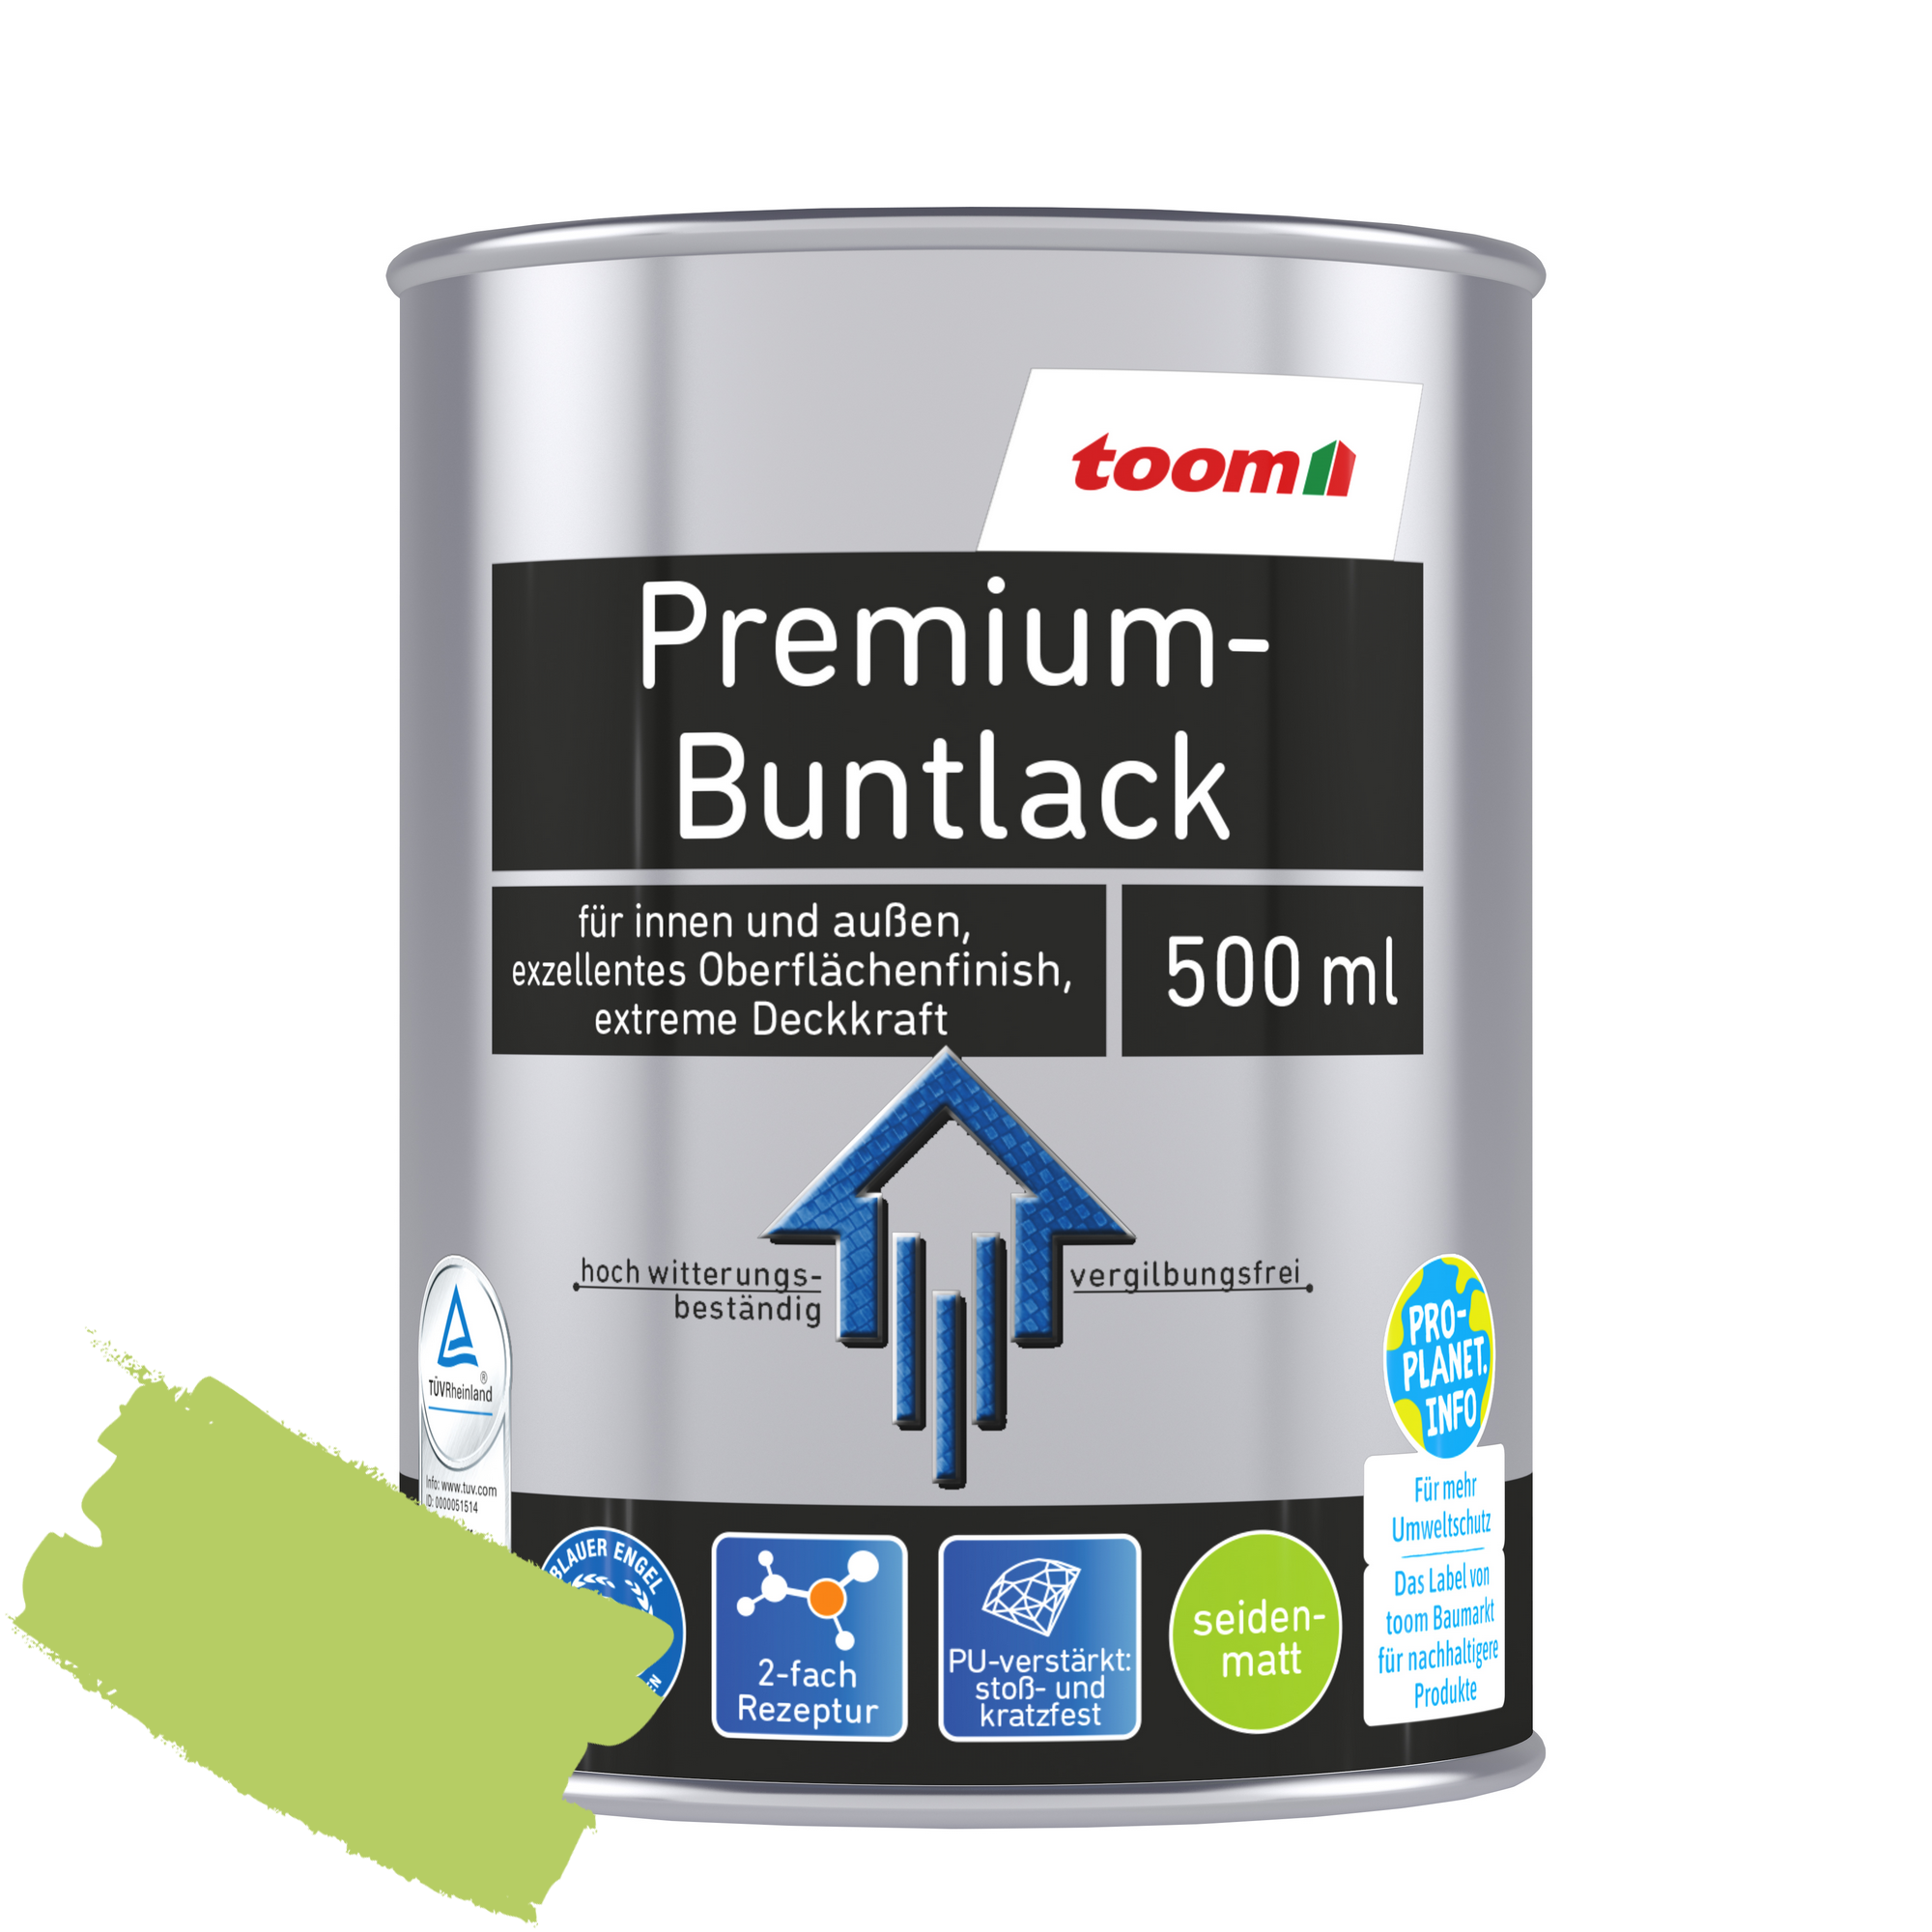 Premium-Buntlack hellgrün seidenmatt 500 ml + product picture